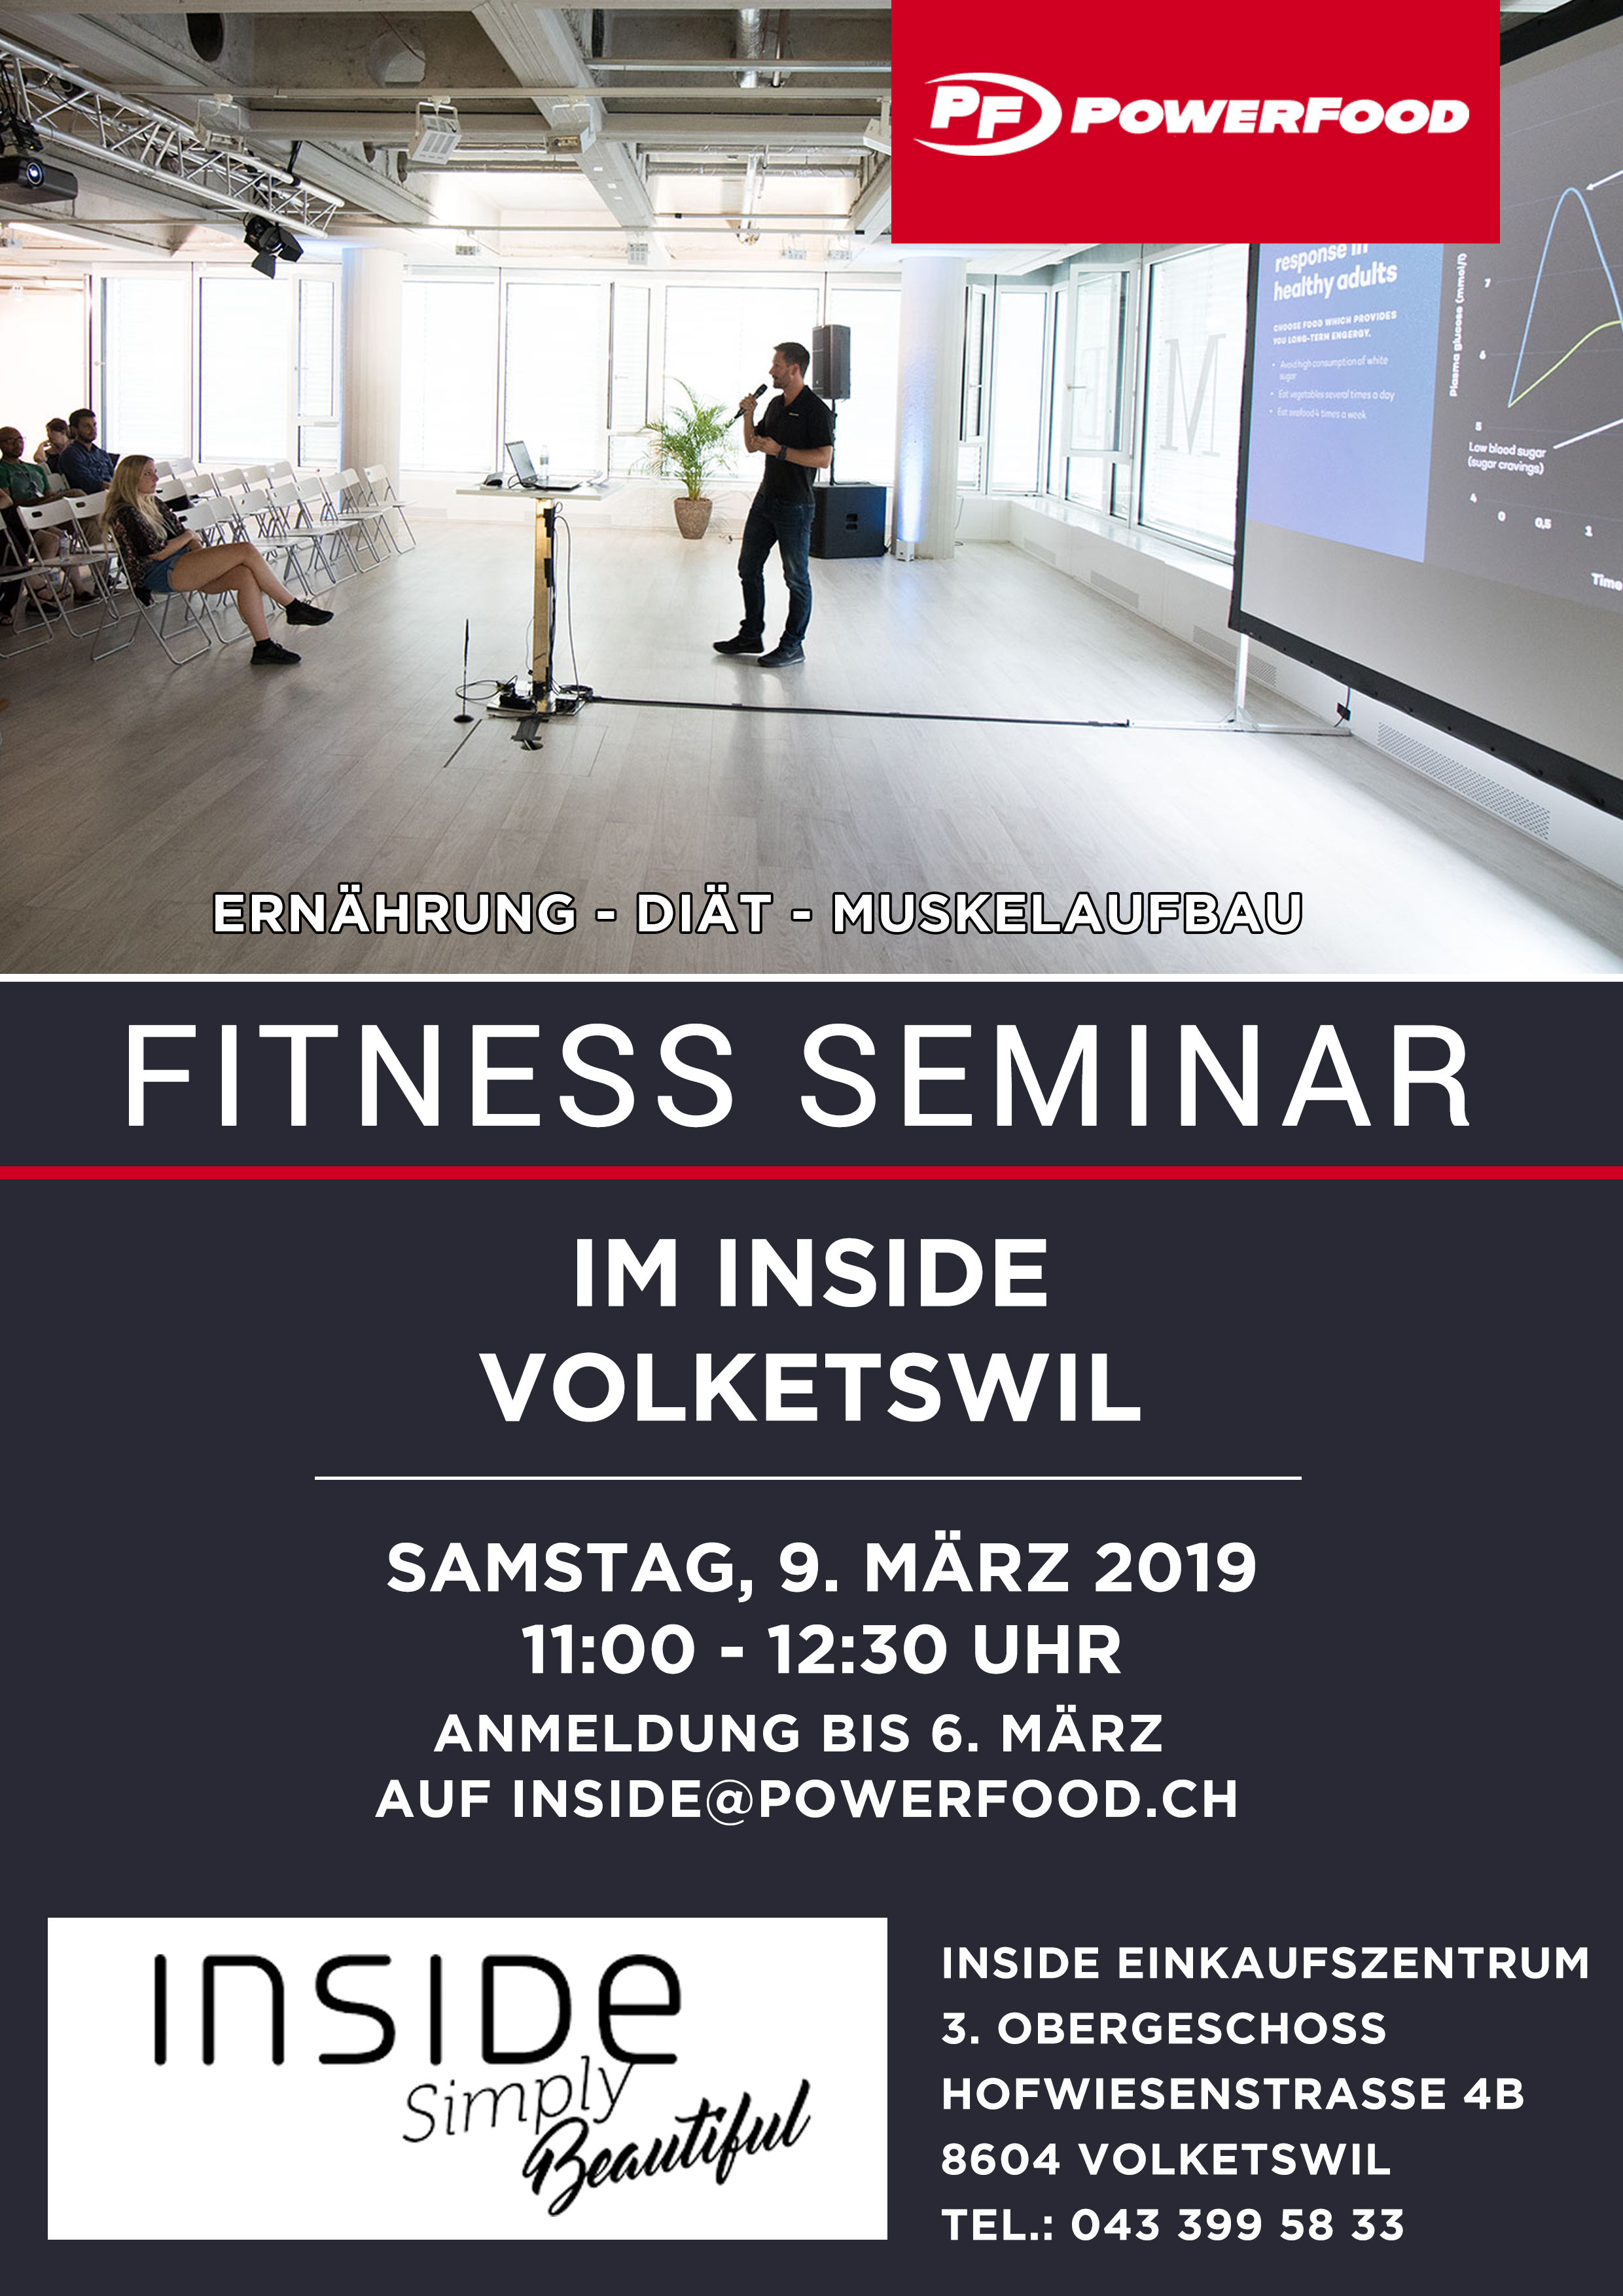 Fitness Seminar in Volketswil